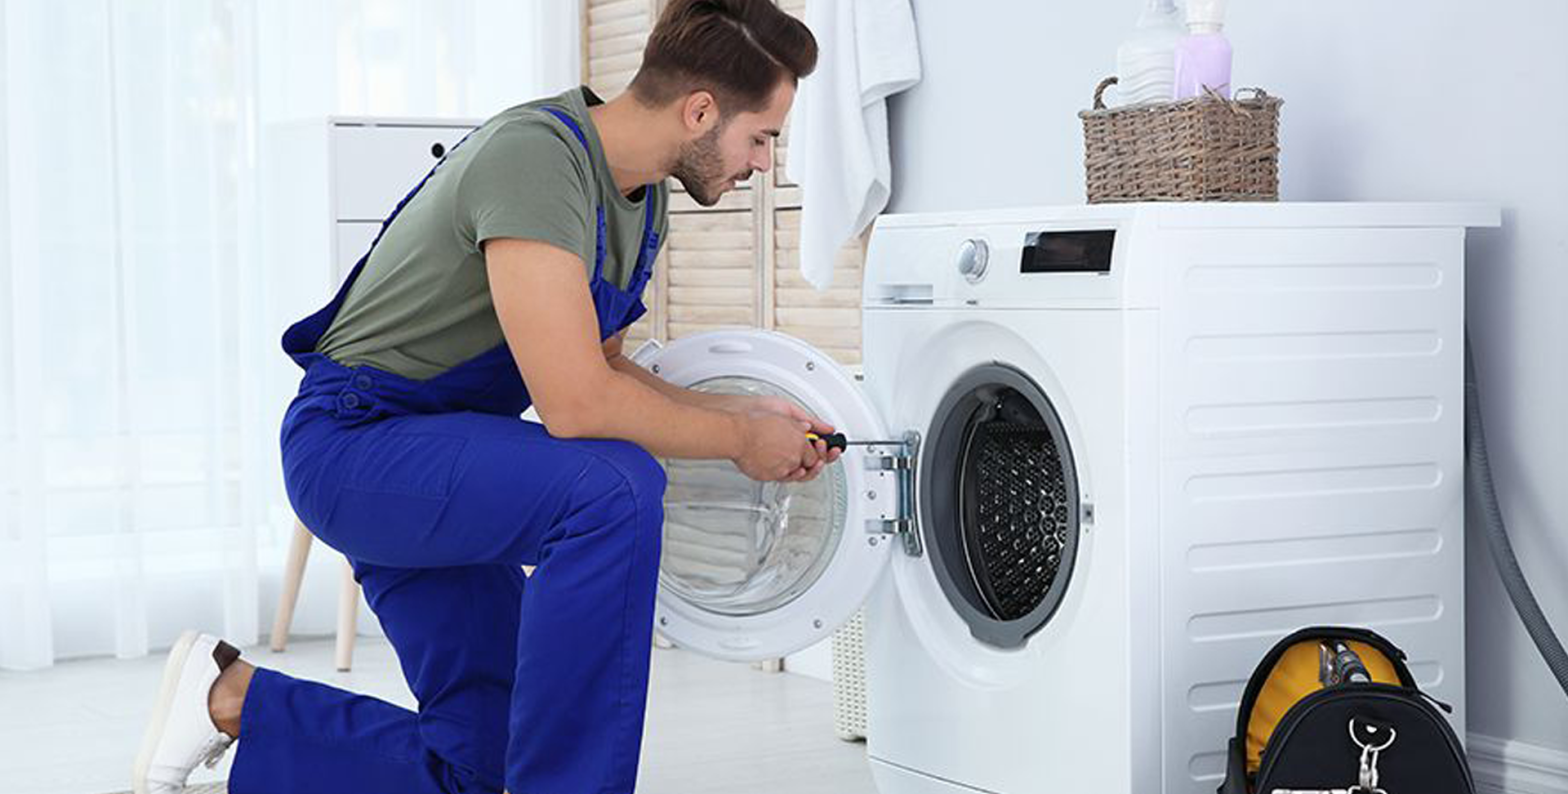 Dryer Repair Services in Virginia by Woodland Appliance Repair